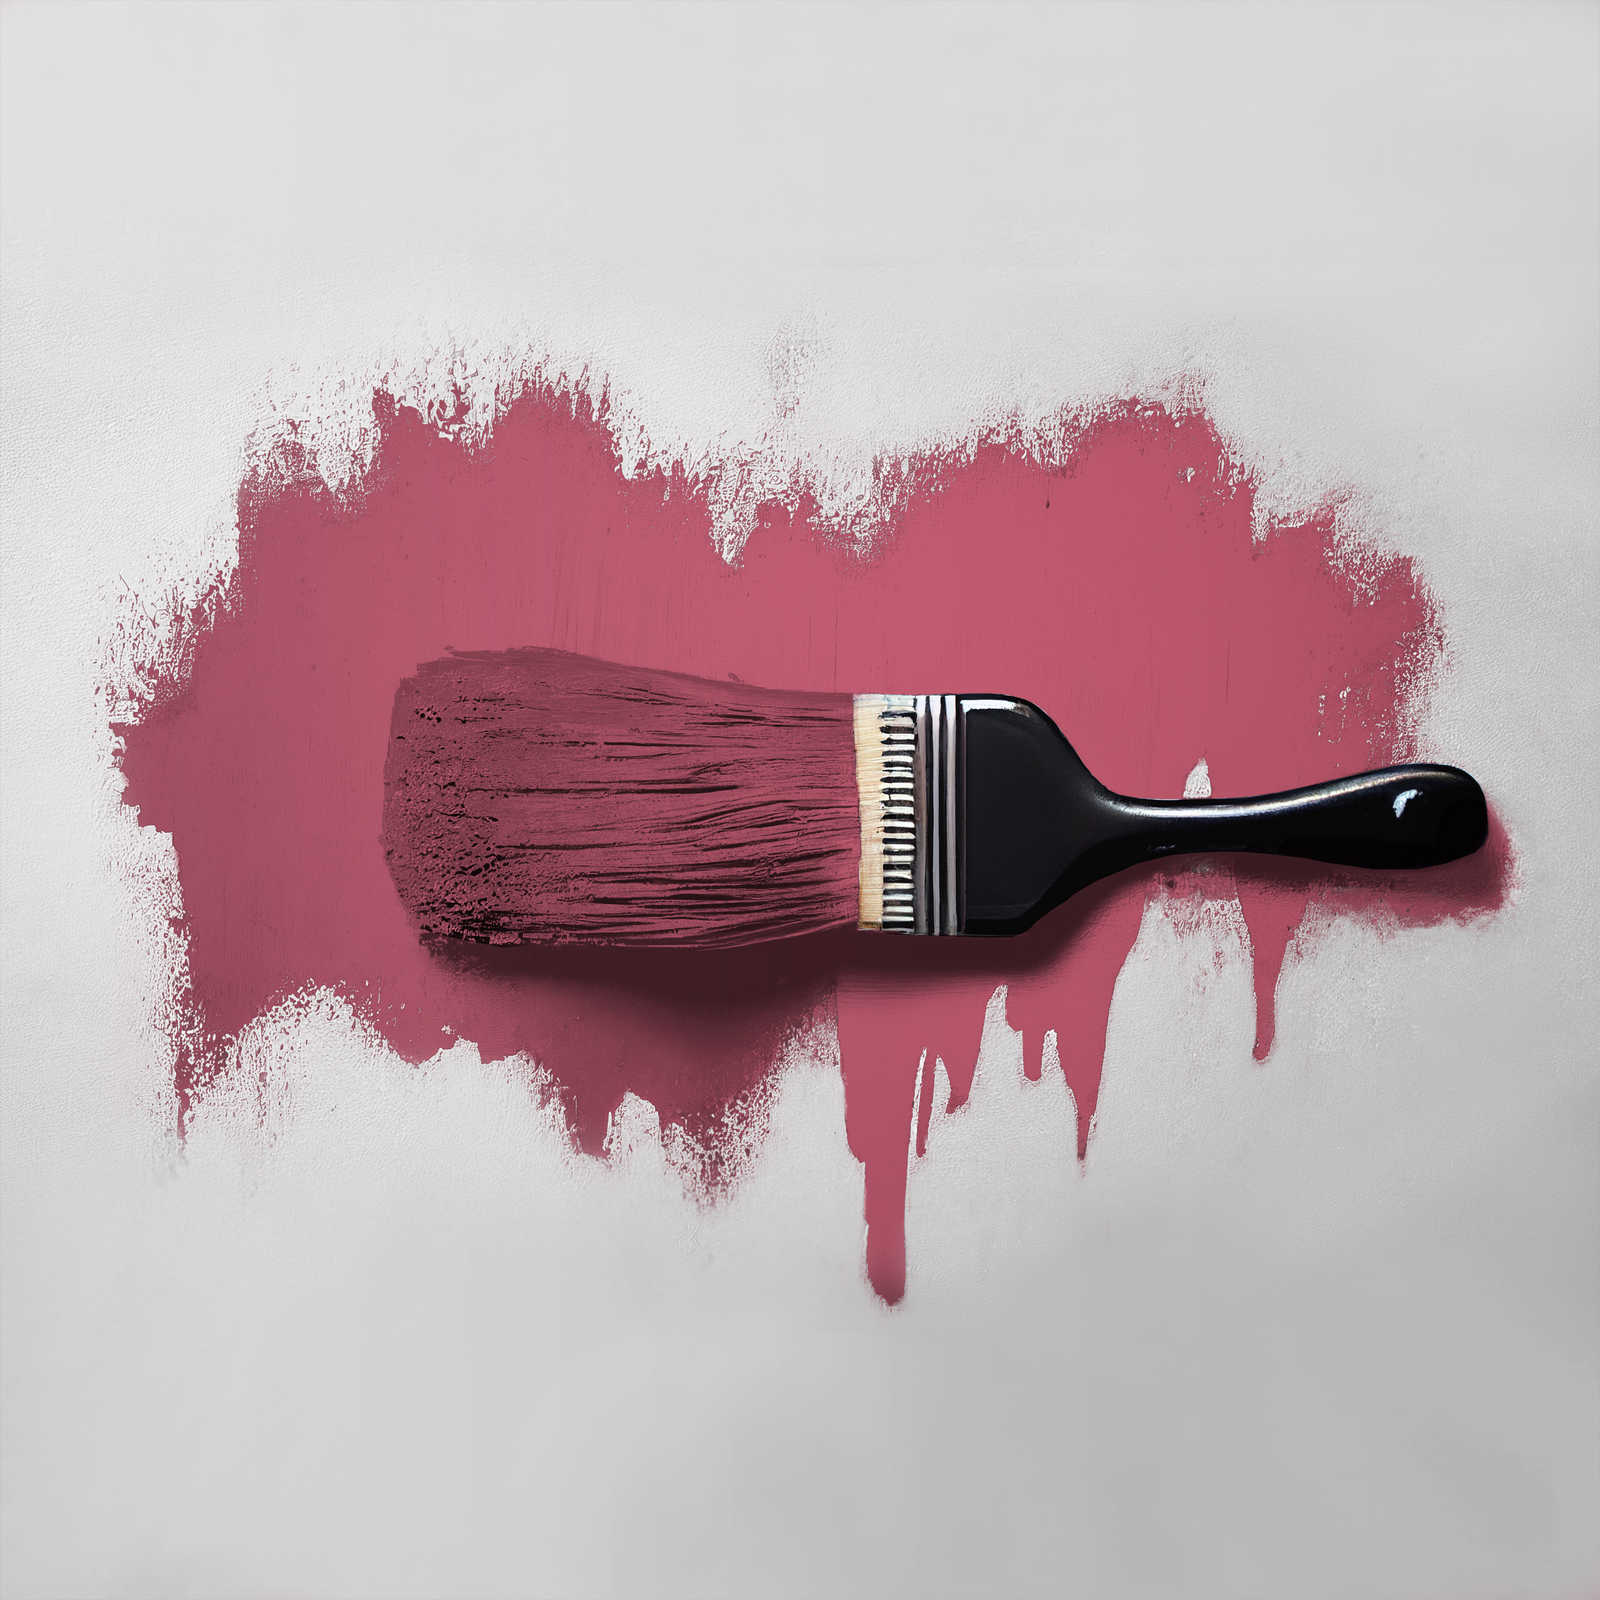             Pittura murale TCK7011 »Rosy Raspberry« in rosa scuro intenso – 2,5 litri
        